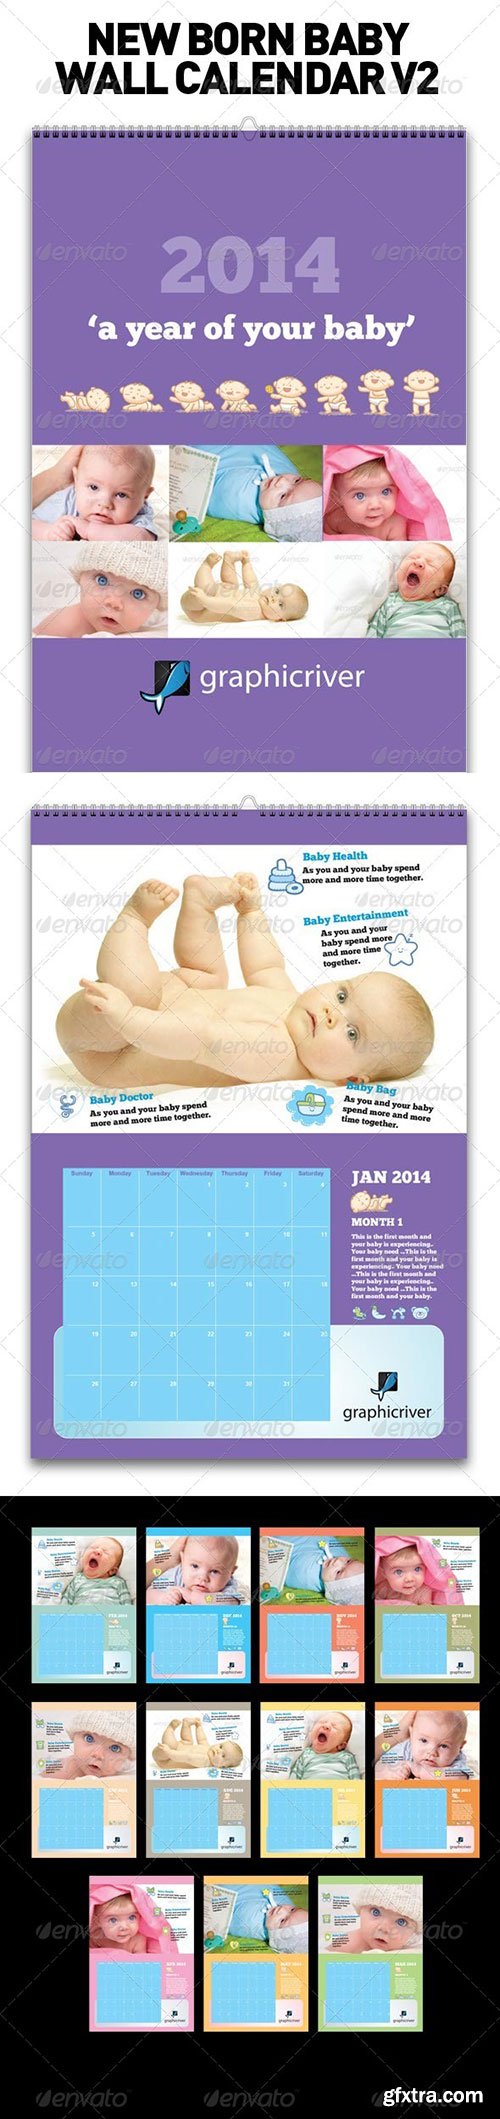 GraphicRiver - New Born Baby Wall Calendar V2